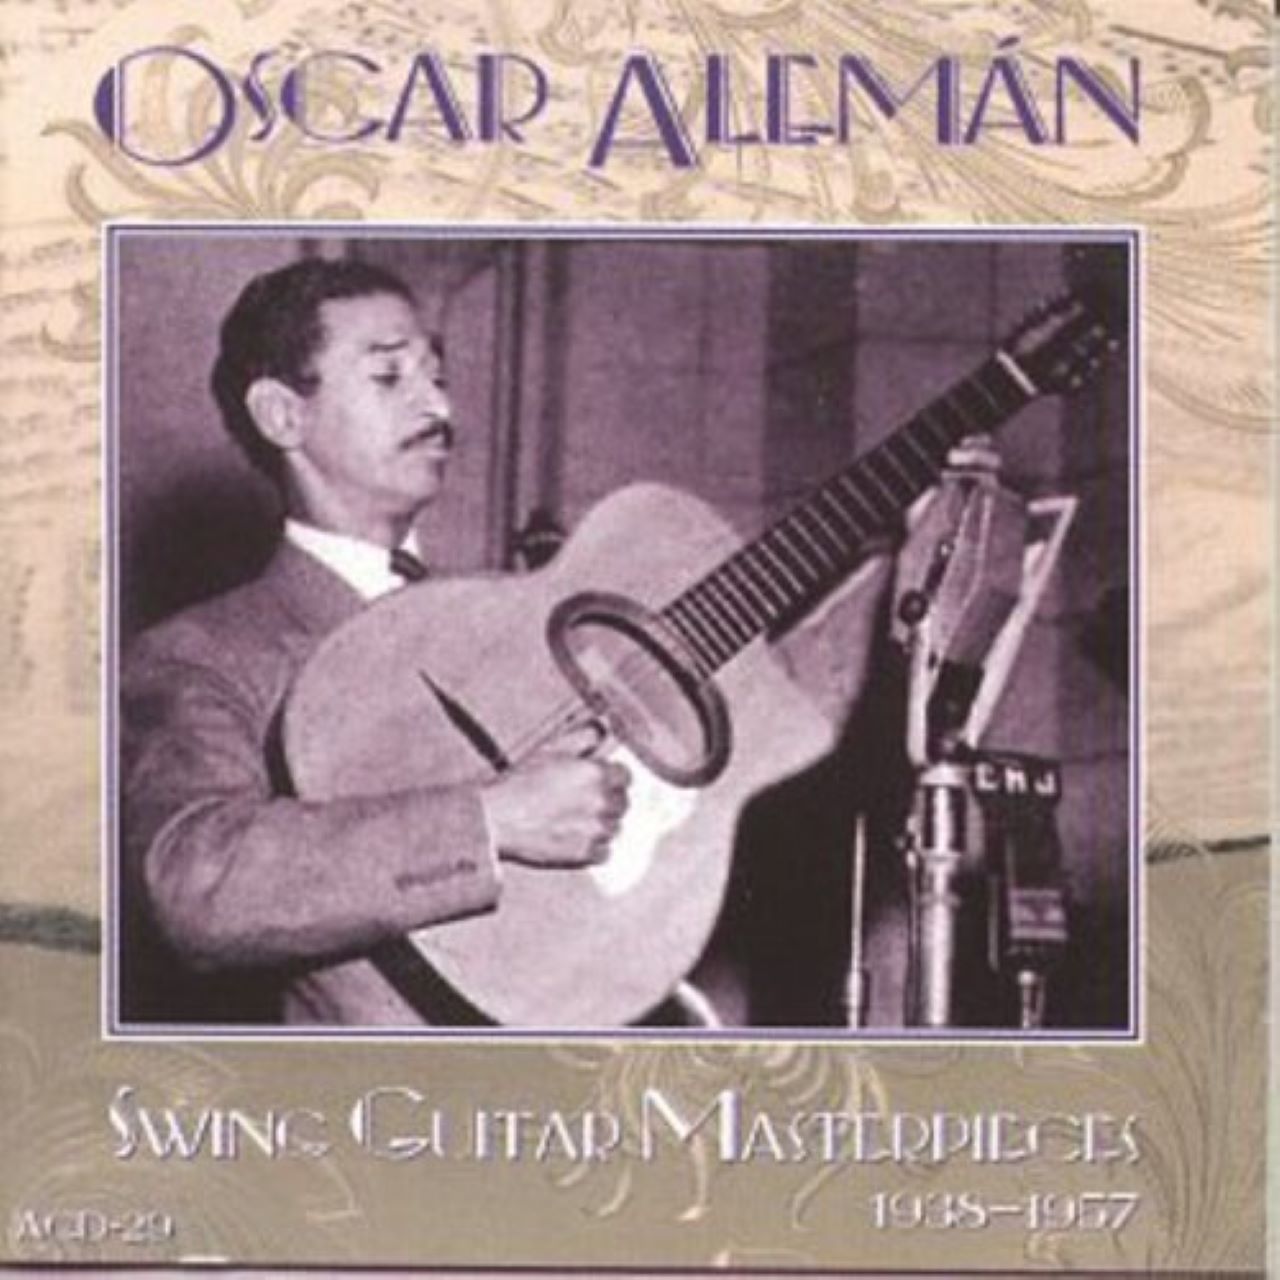 Oscar Alemàn - Swing Guitar Masterpieces 1938-57 cover album